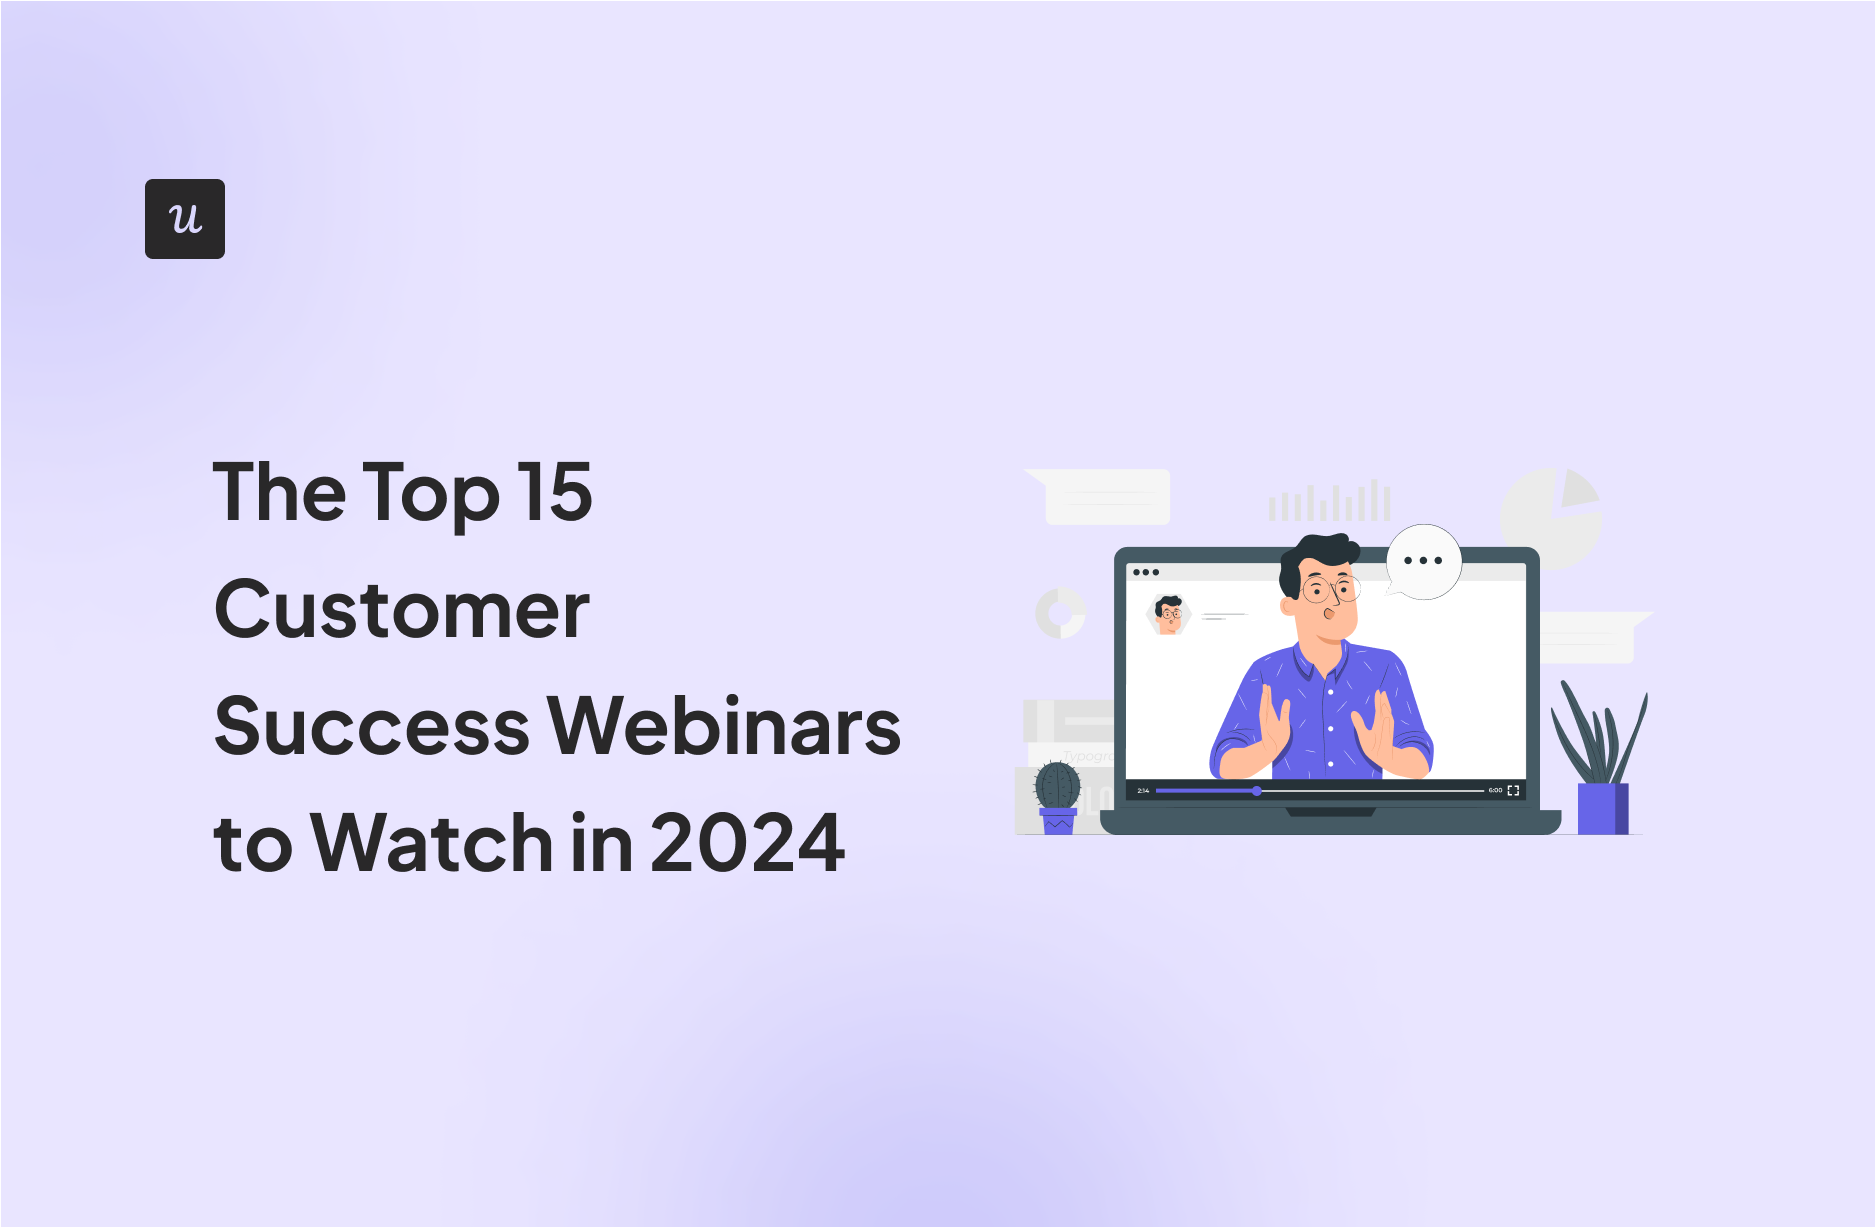 The Top 15 Customer Success Webinars to Watch in 2024